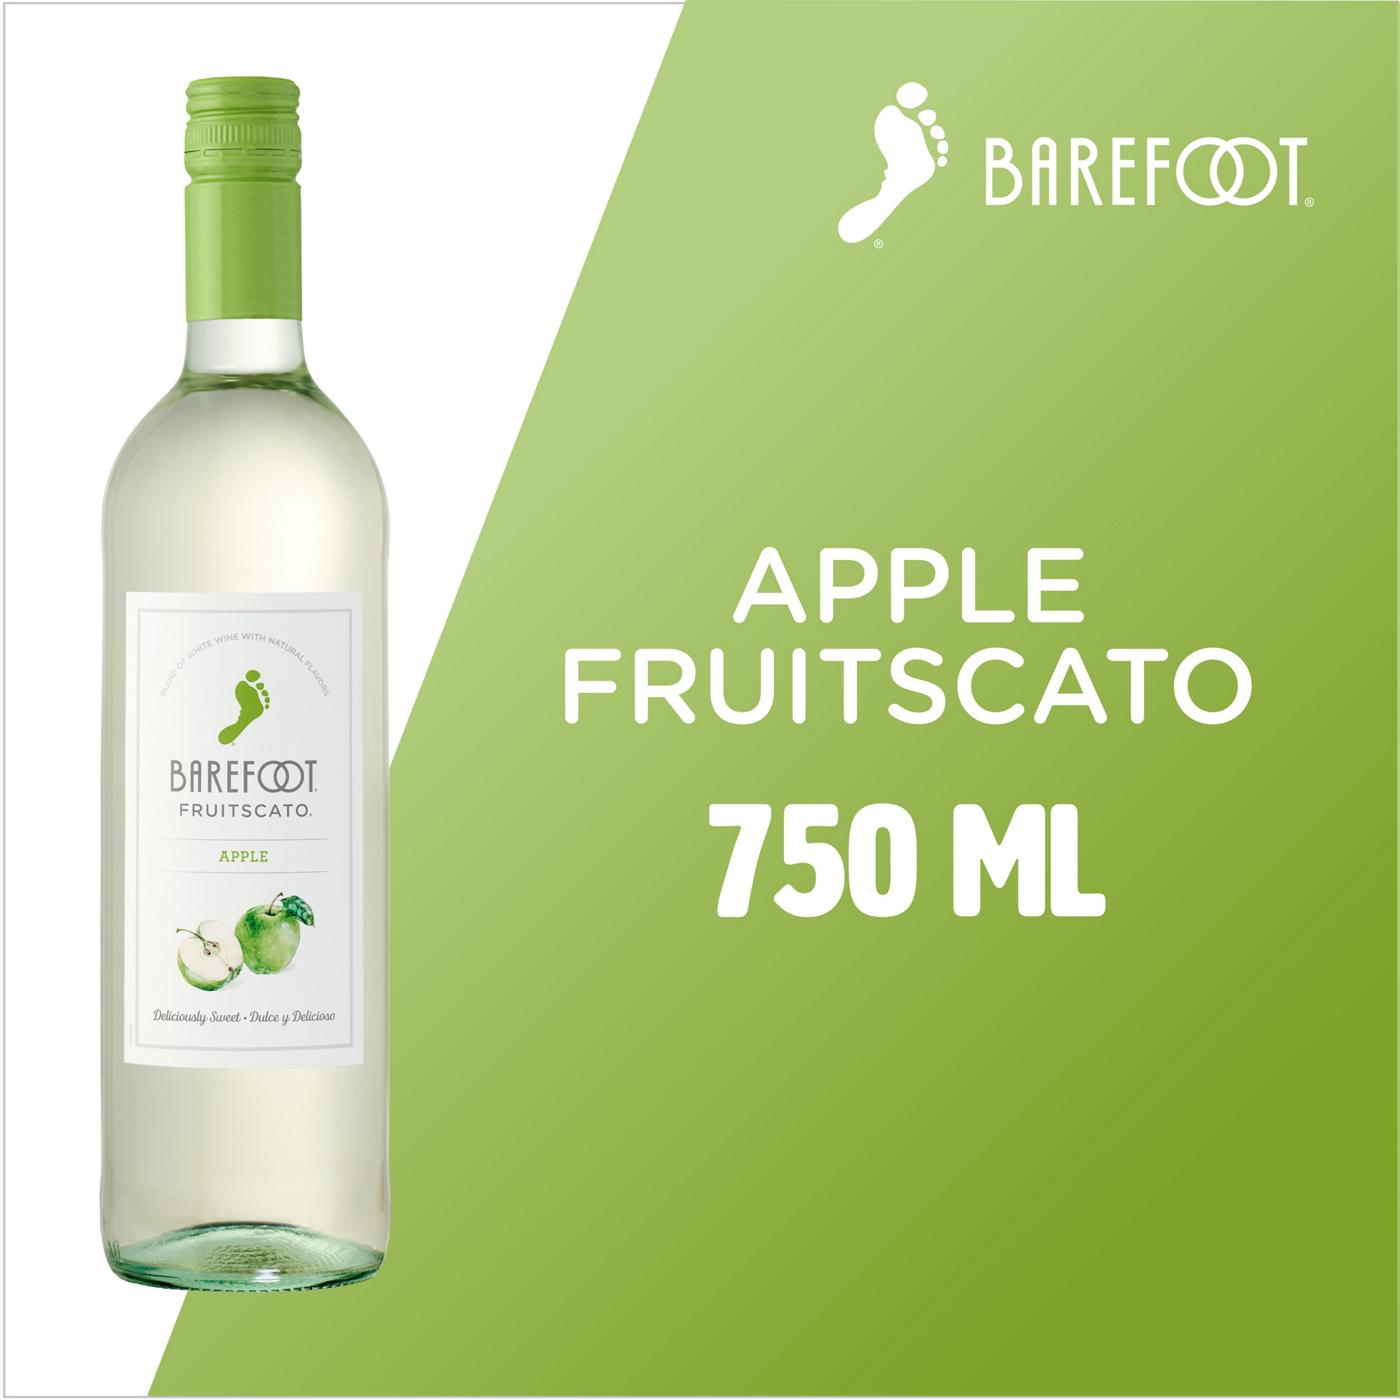 Barefoot Fruitscato Sweet Apple Moscato; image 2 of 8